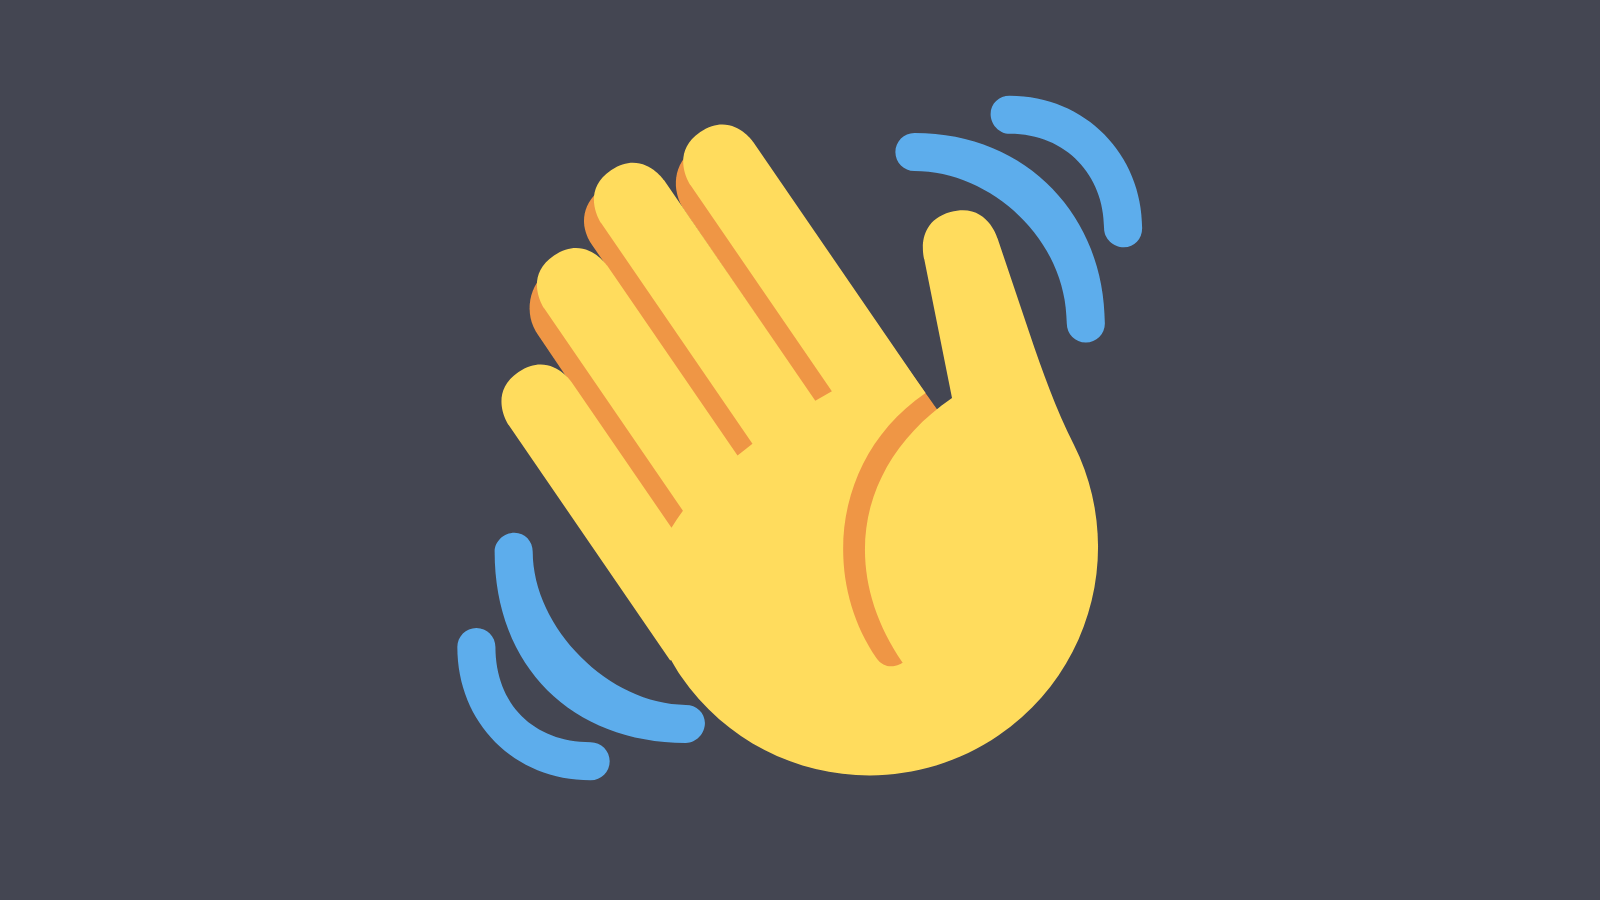 A large waving hand emoji